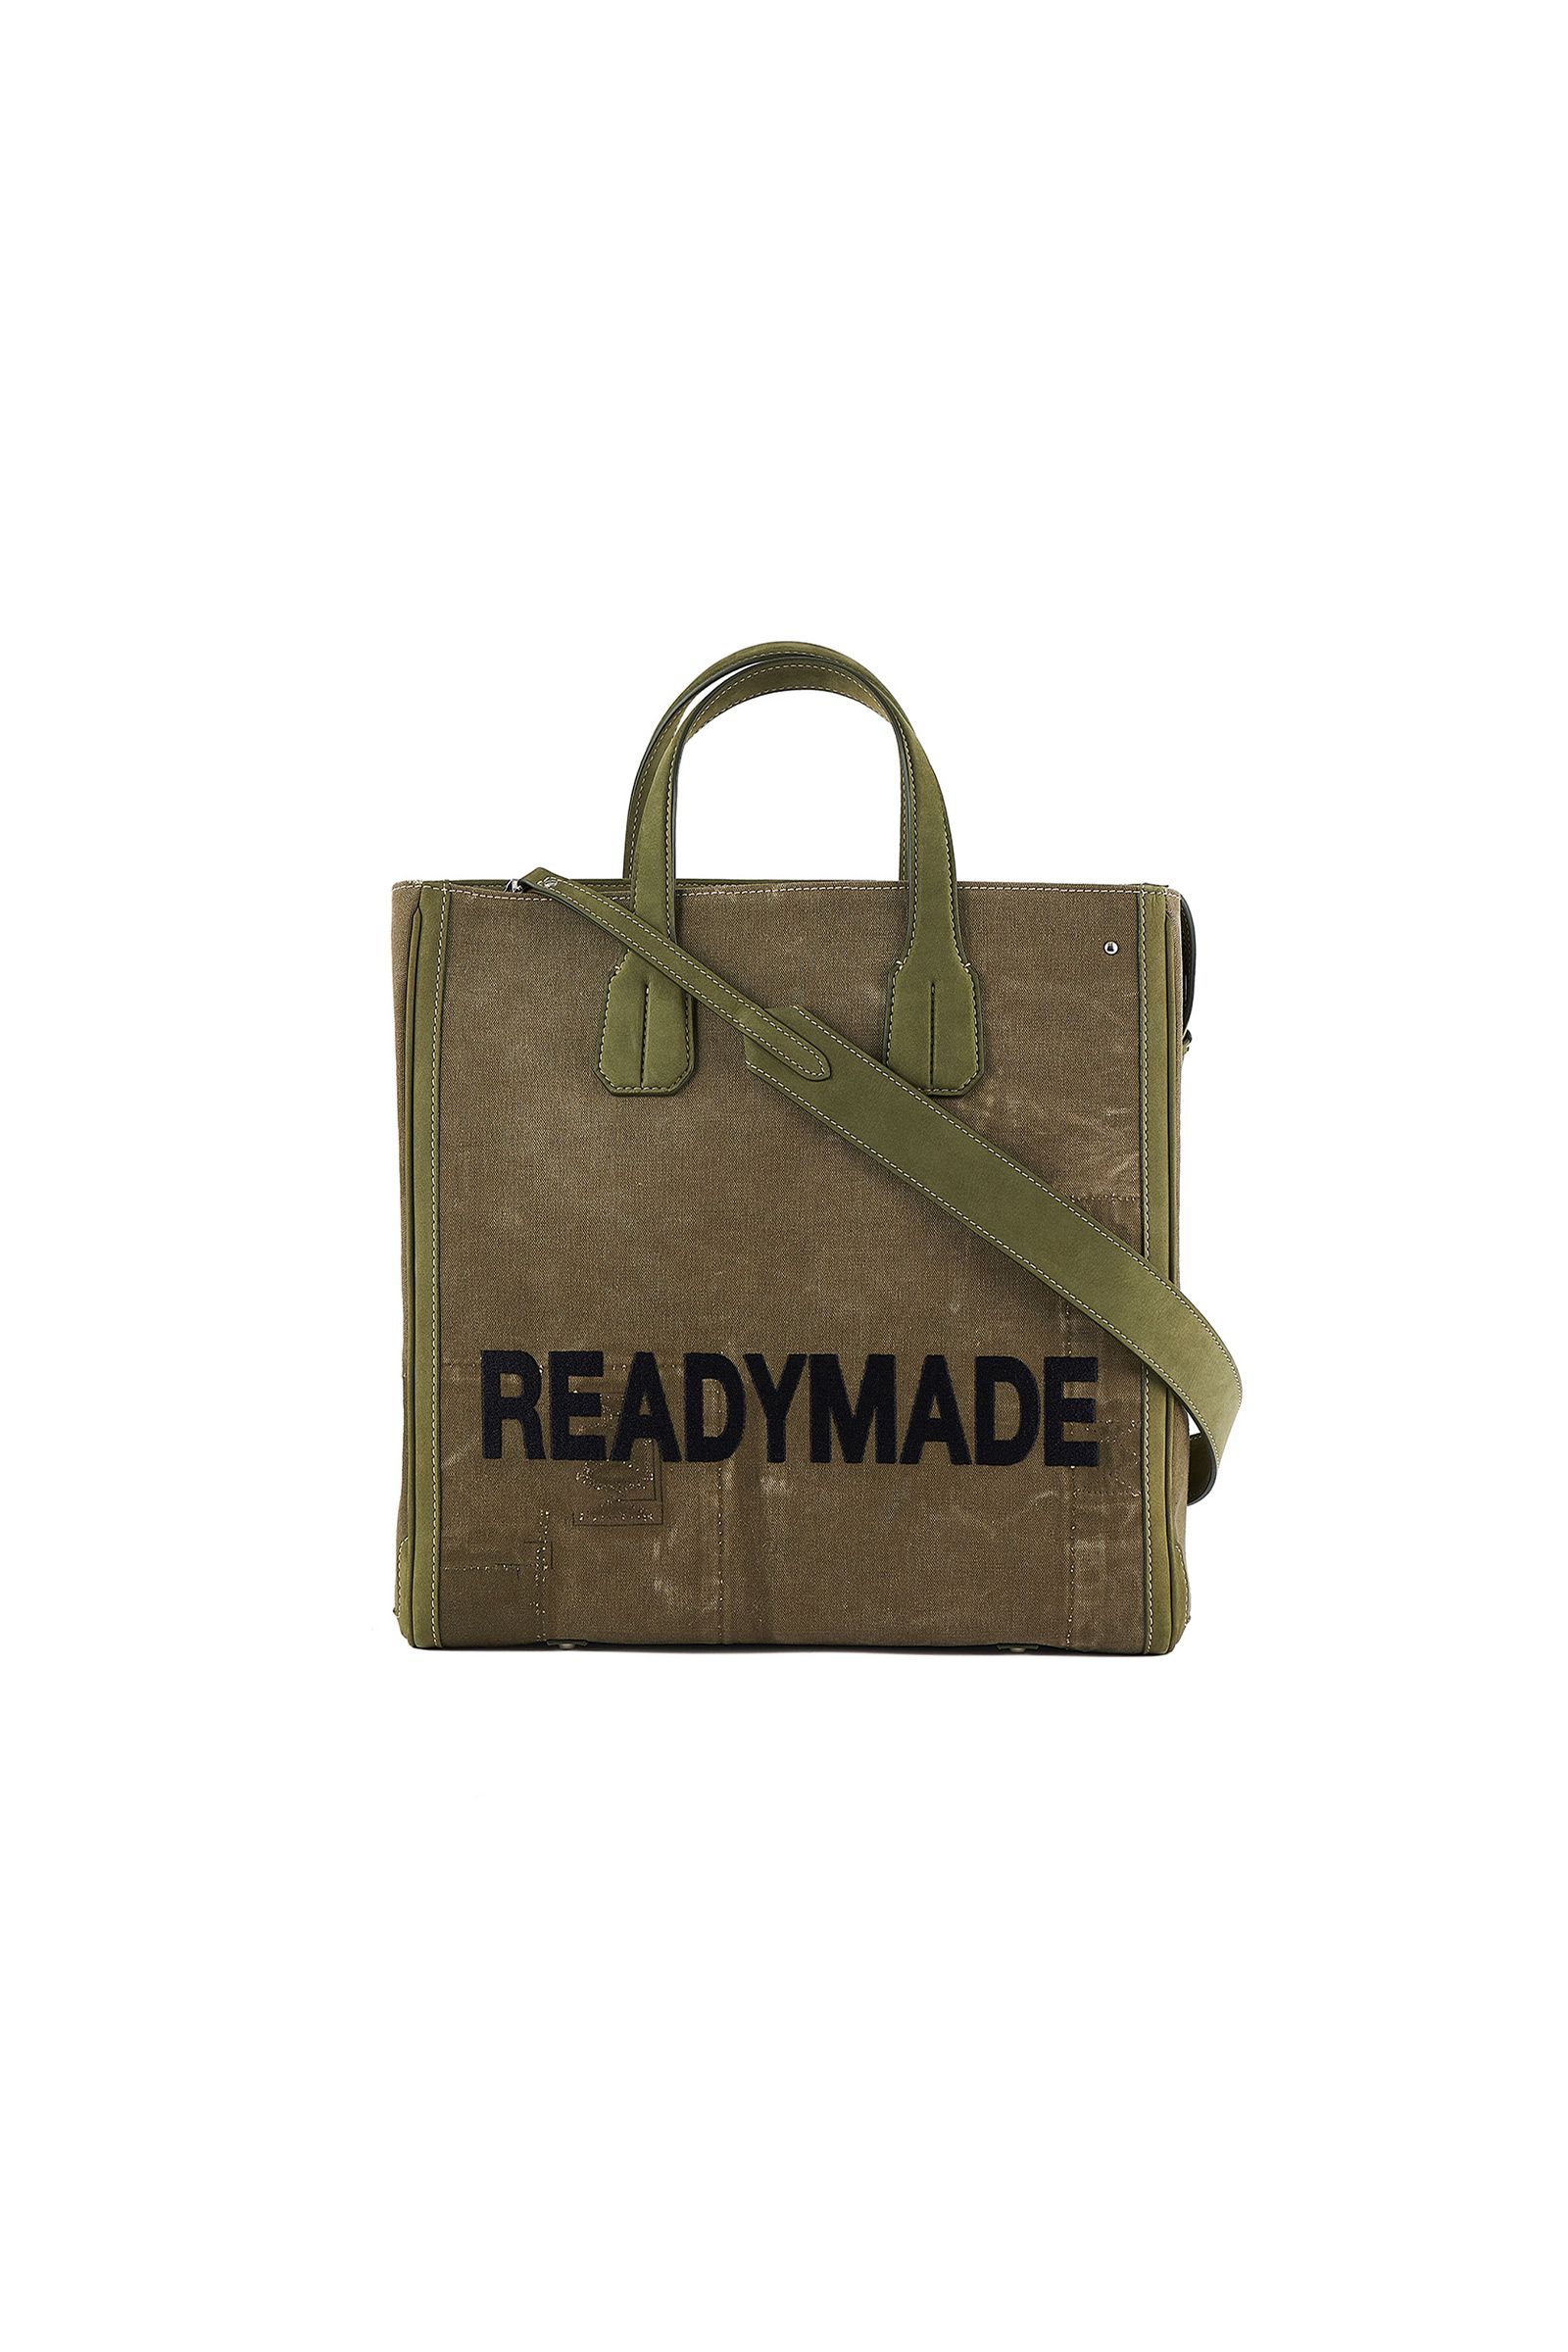 READYMADE - レディメイド | 正規通販ストア Detail